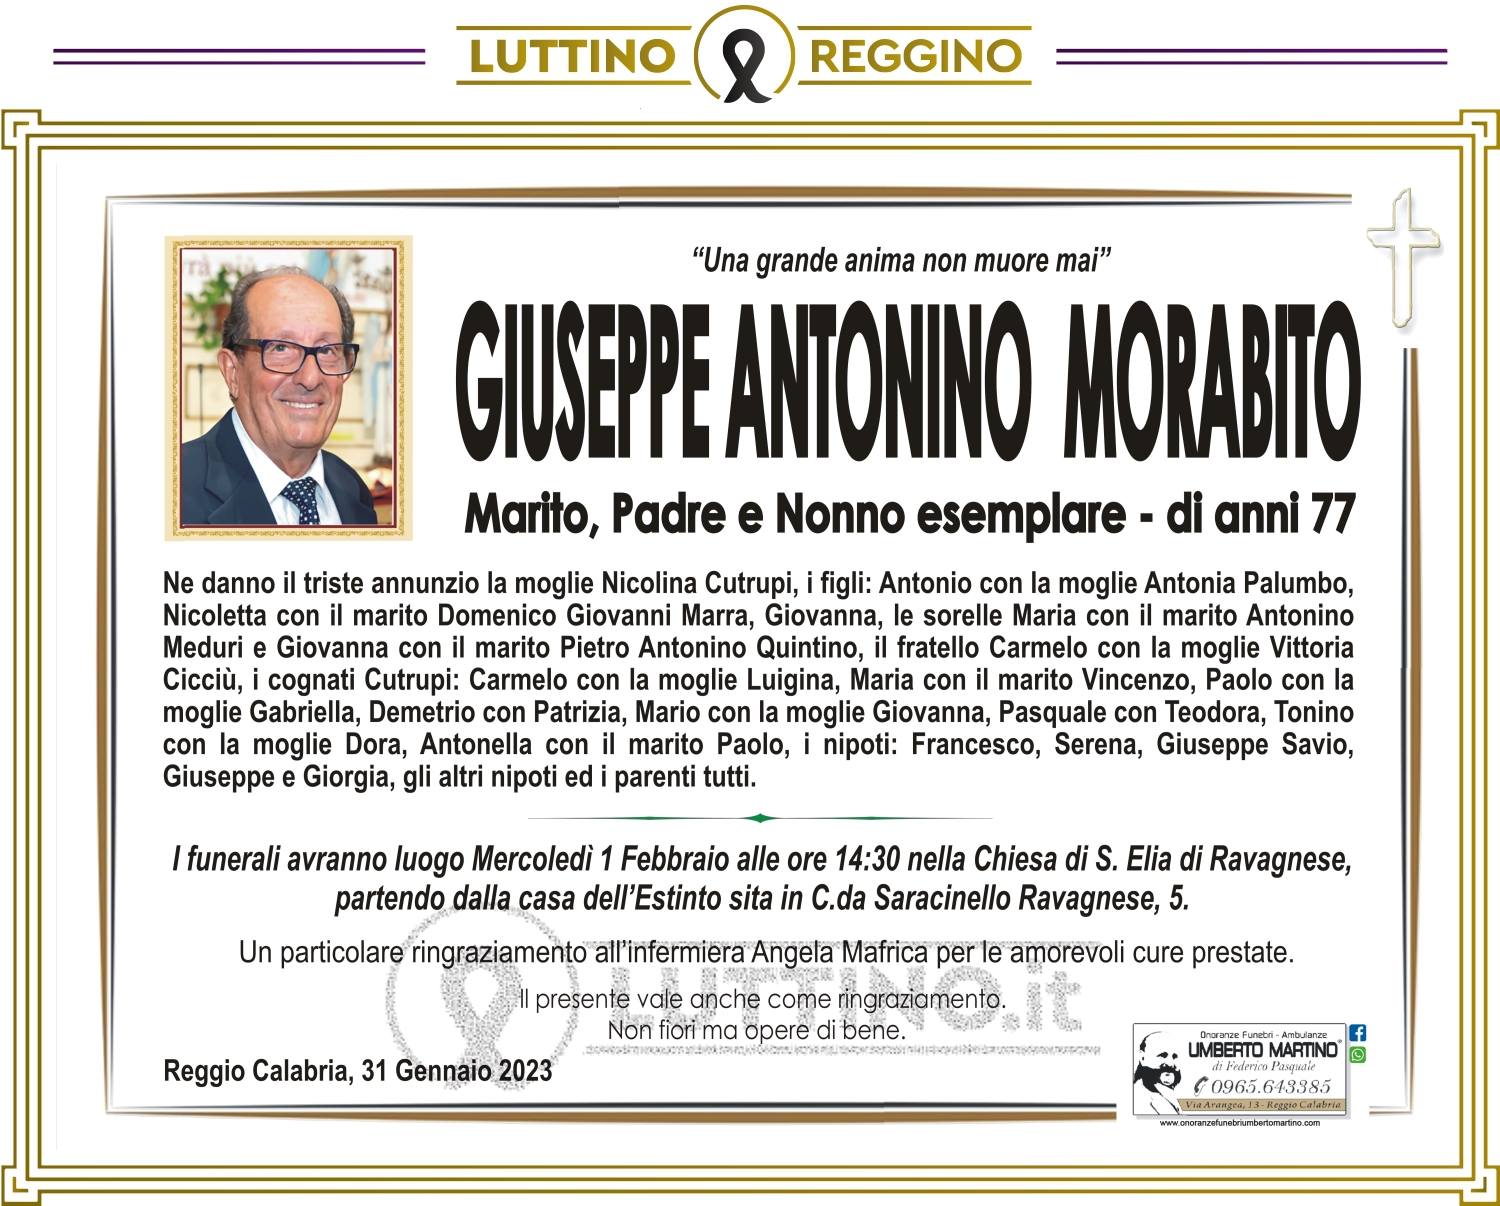 Giuseppe Antonino Morabito